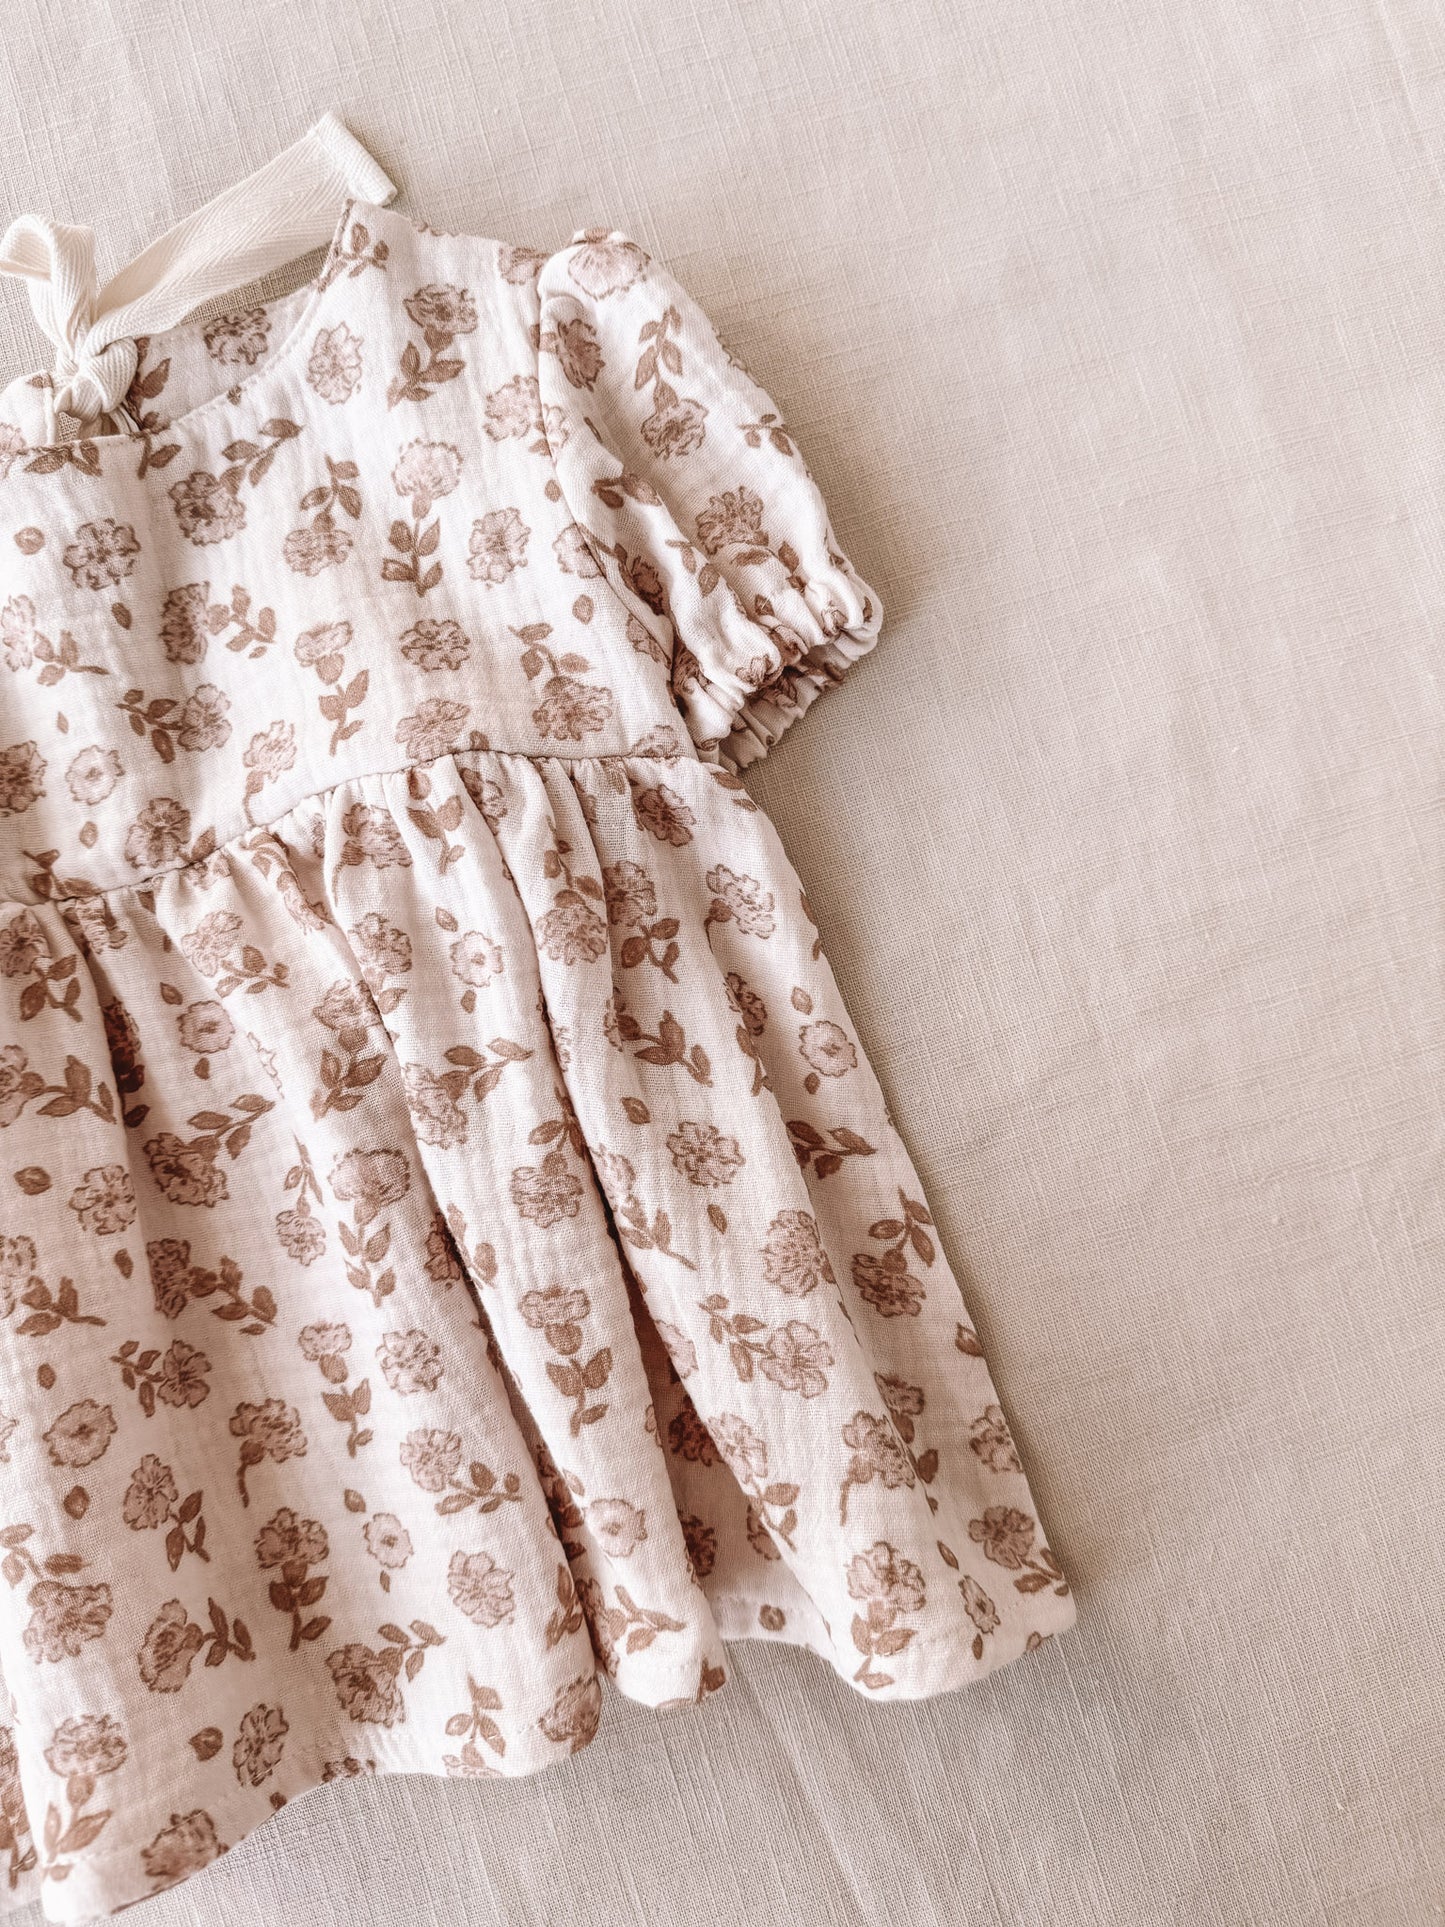 Florence baby dress / blossom